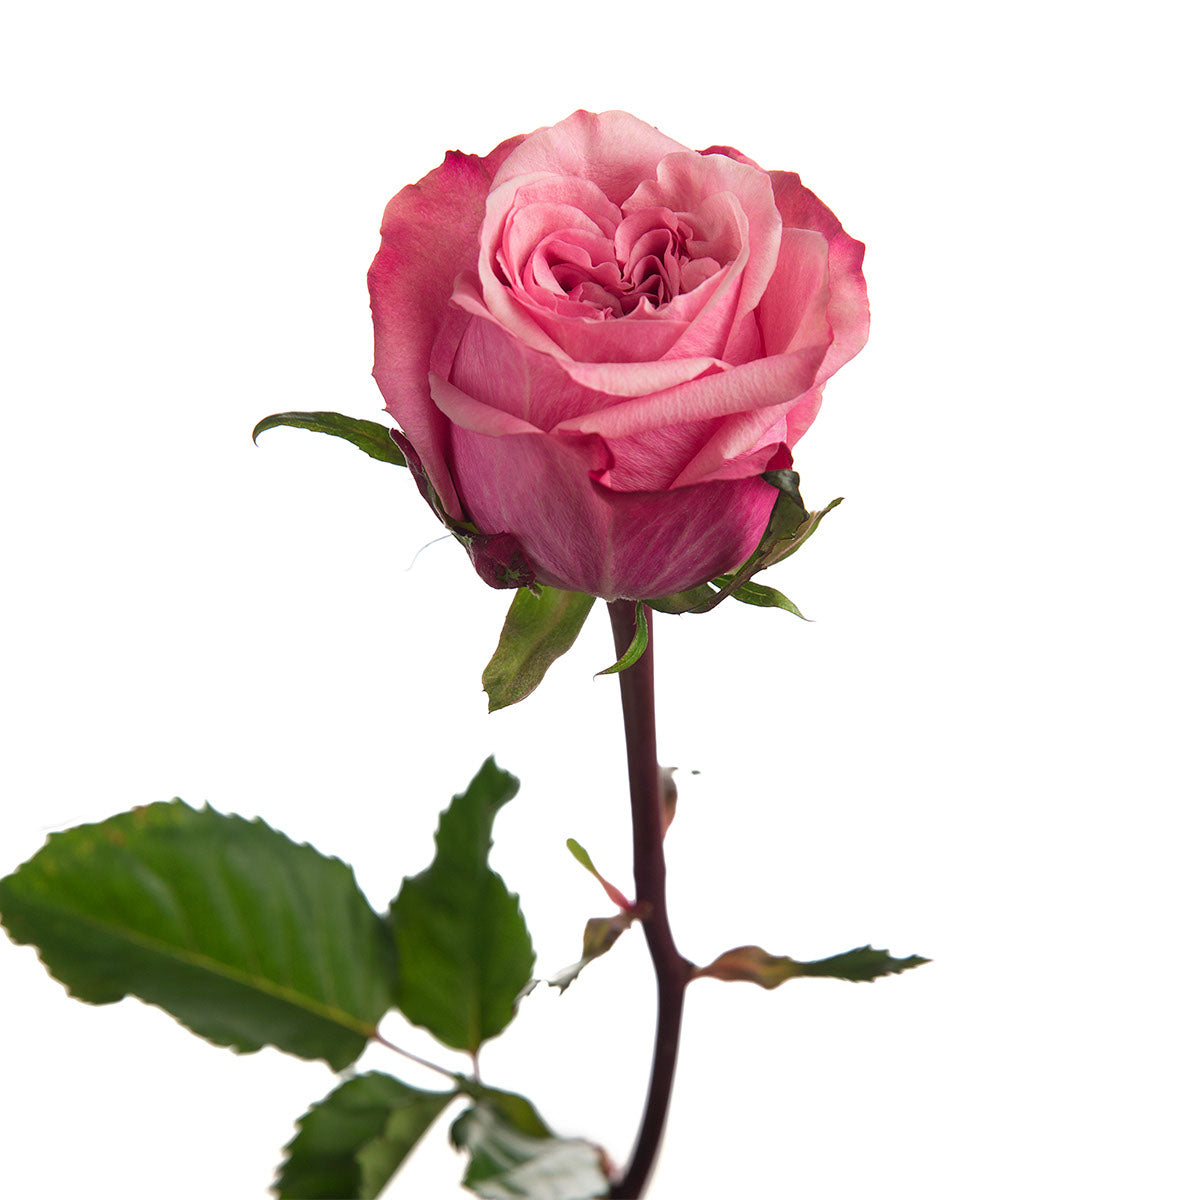 Art Deco Garden Rose